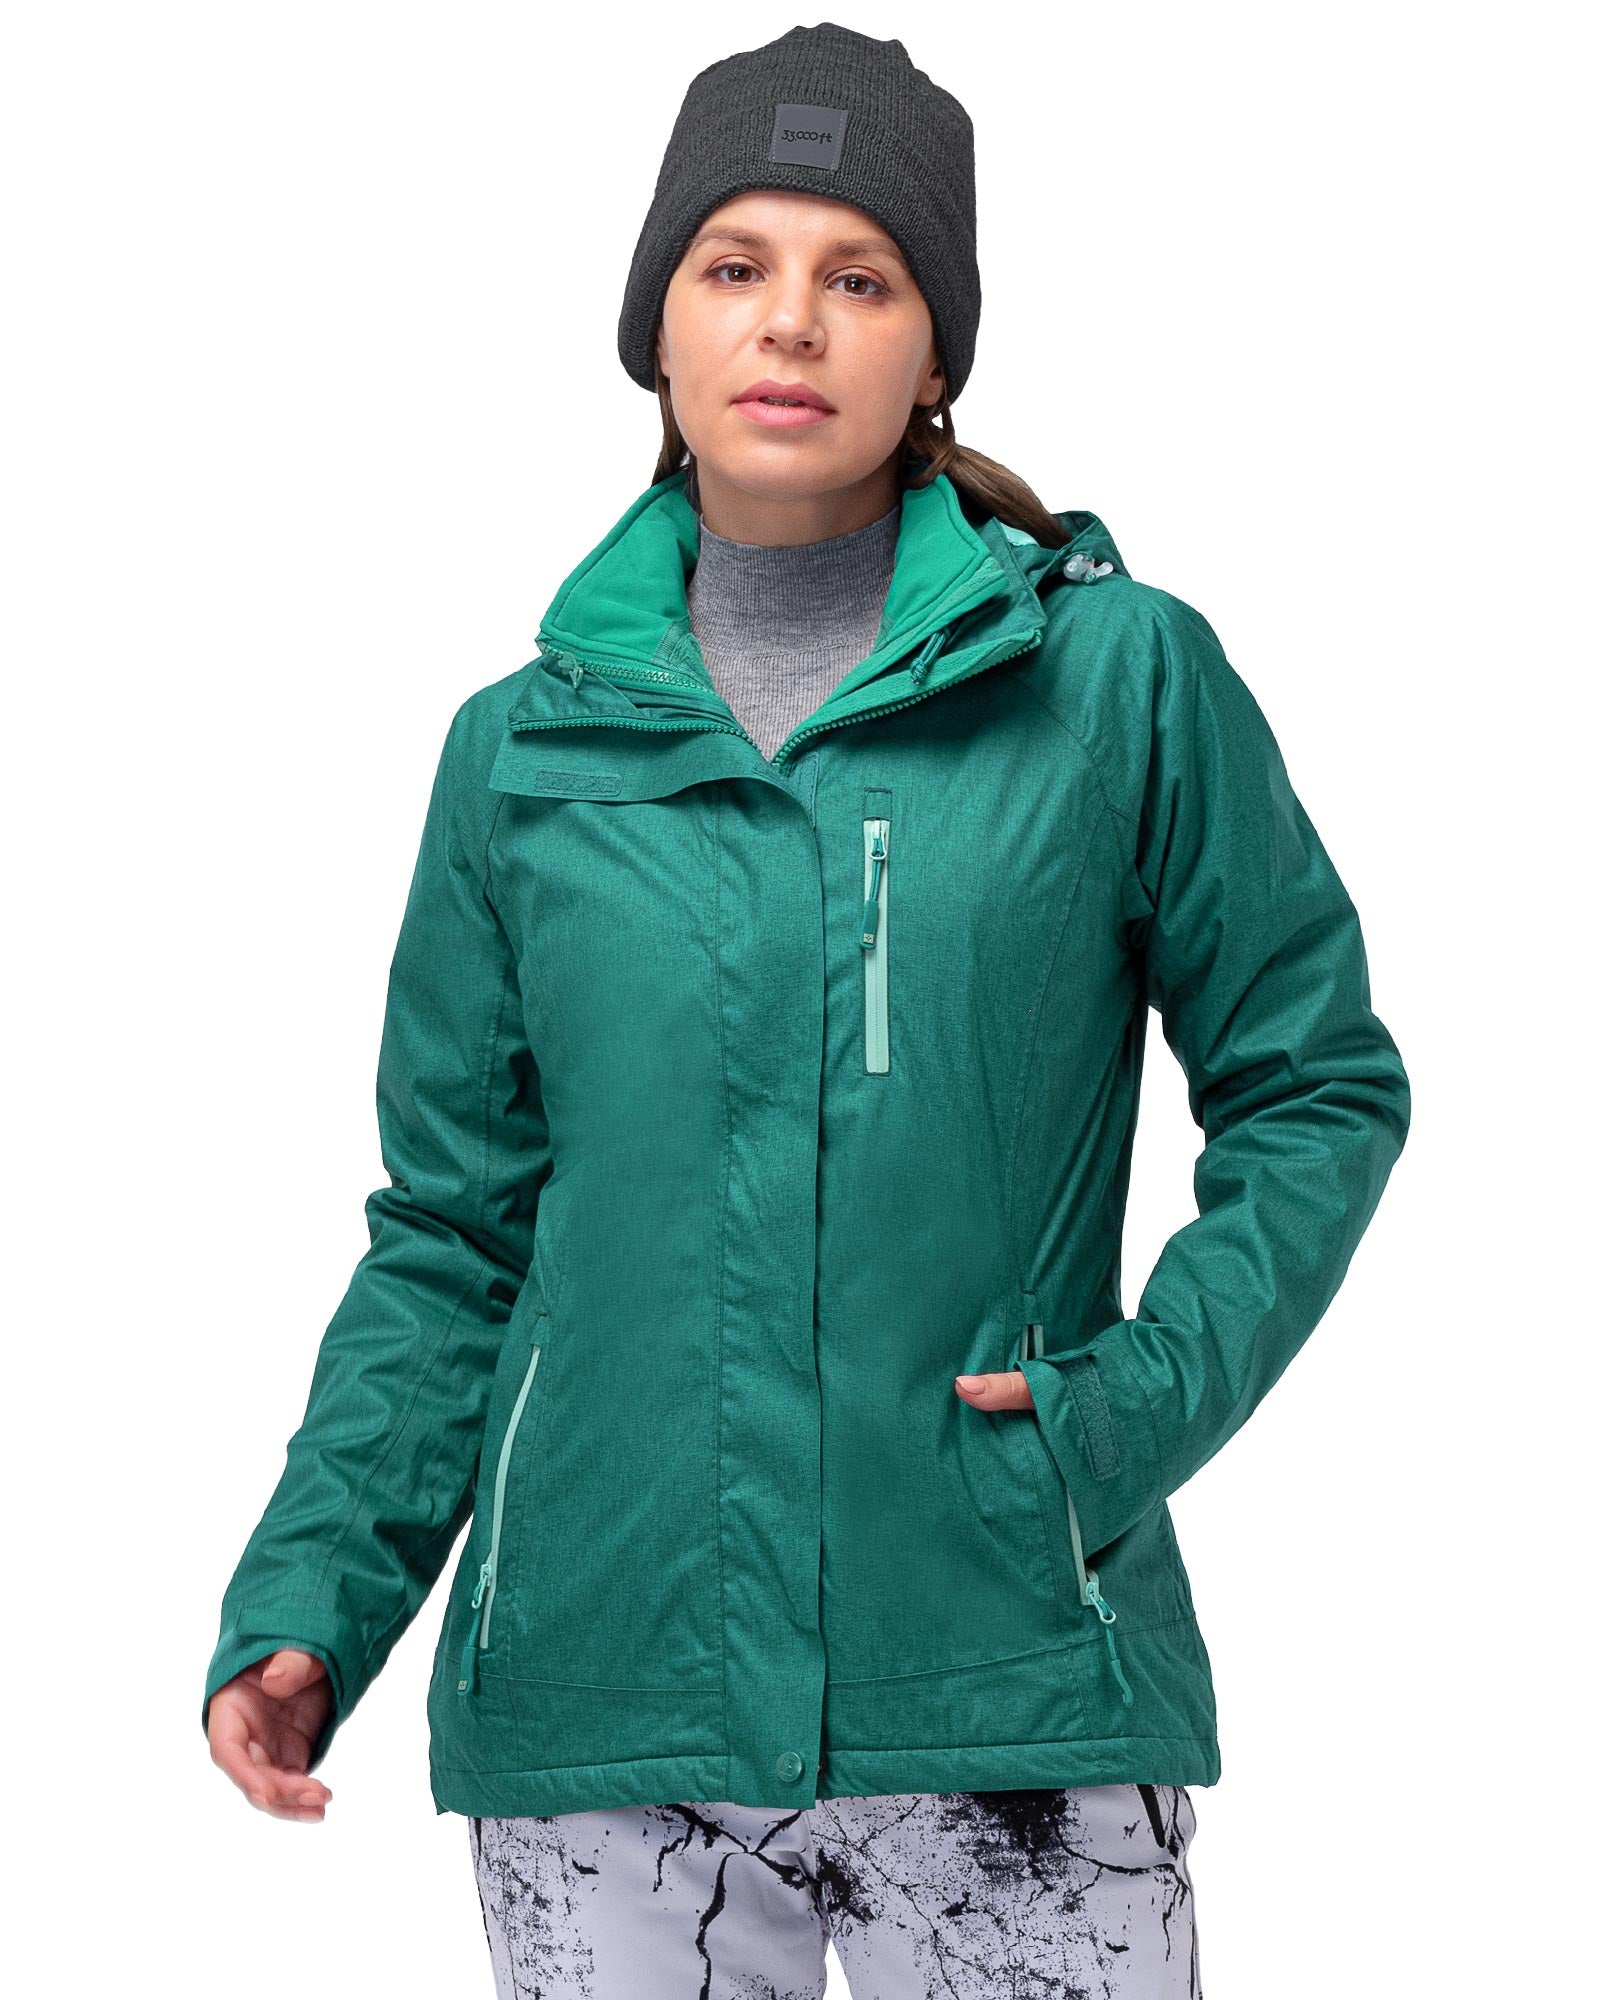 Winter Coats & Rain Jackets for Women